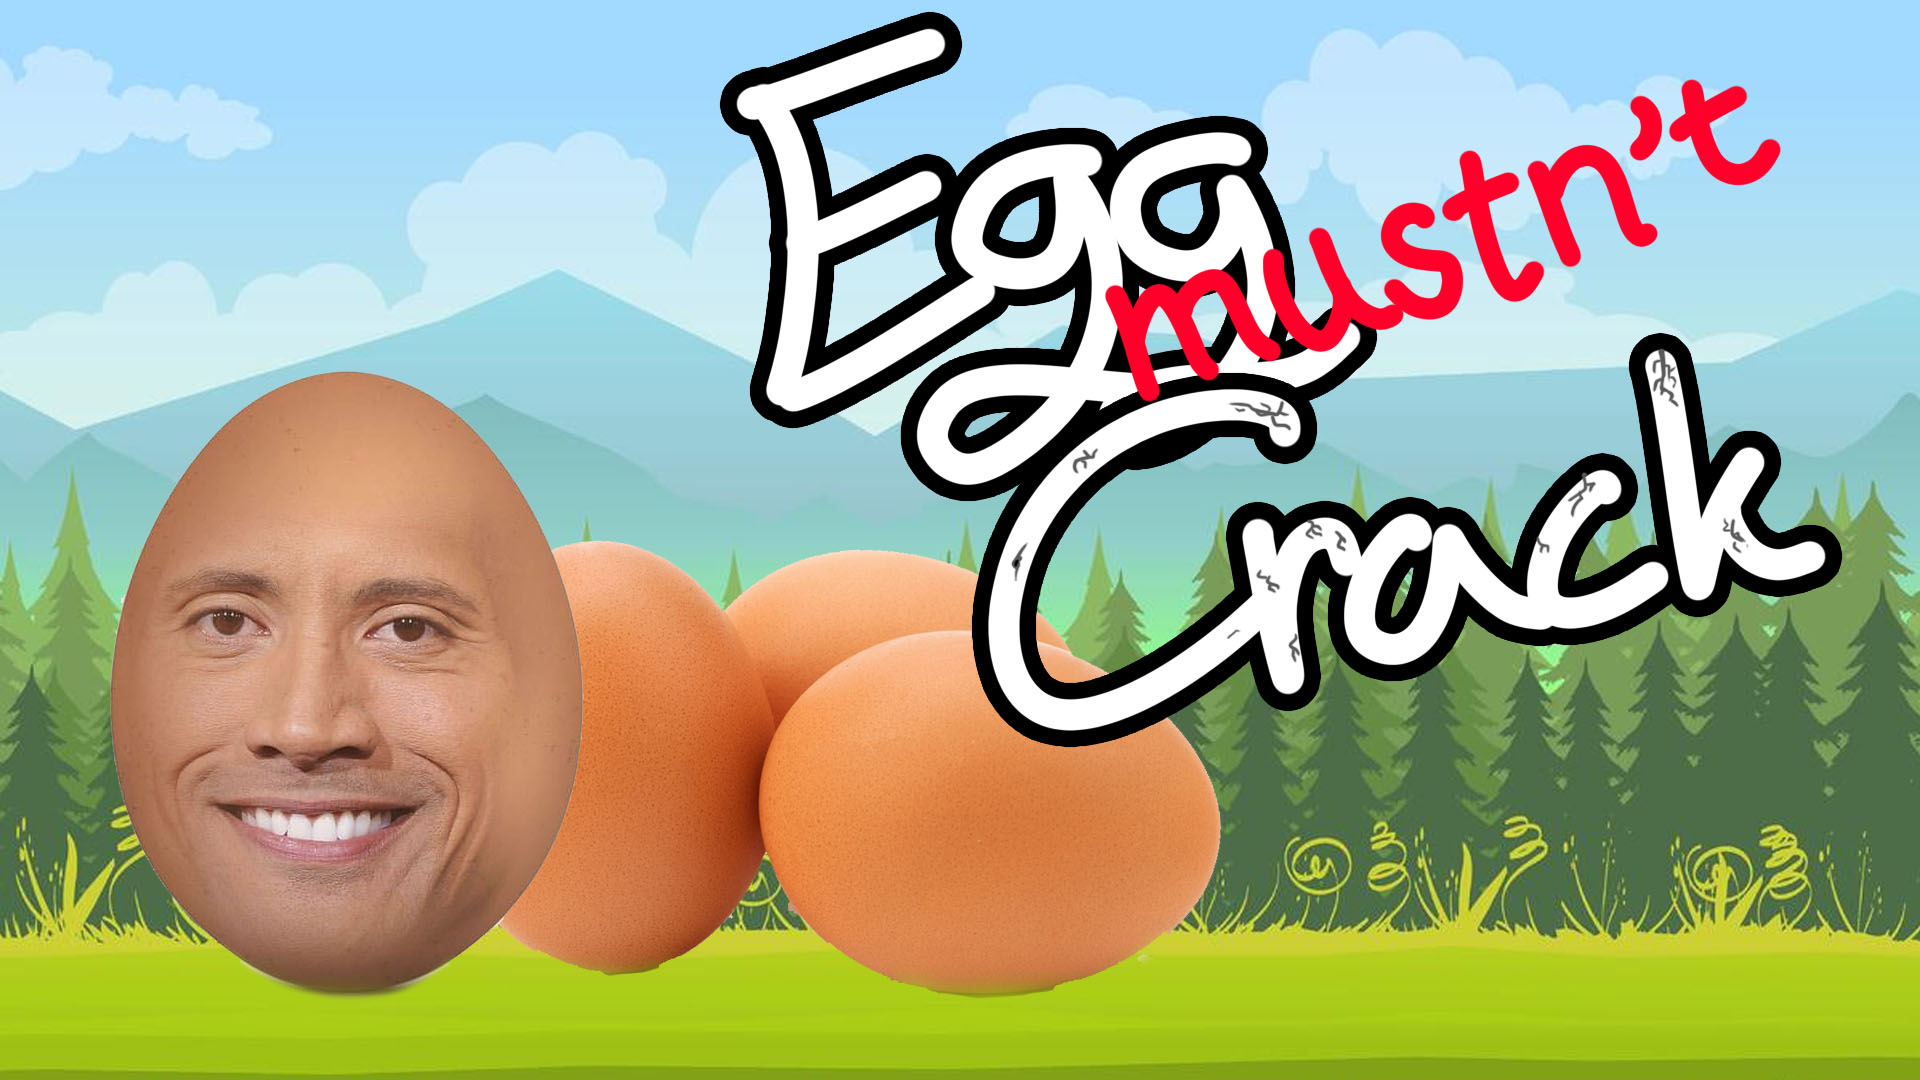 EggMustn'tCrack